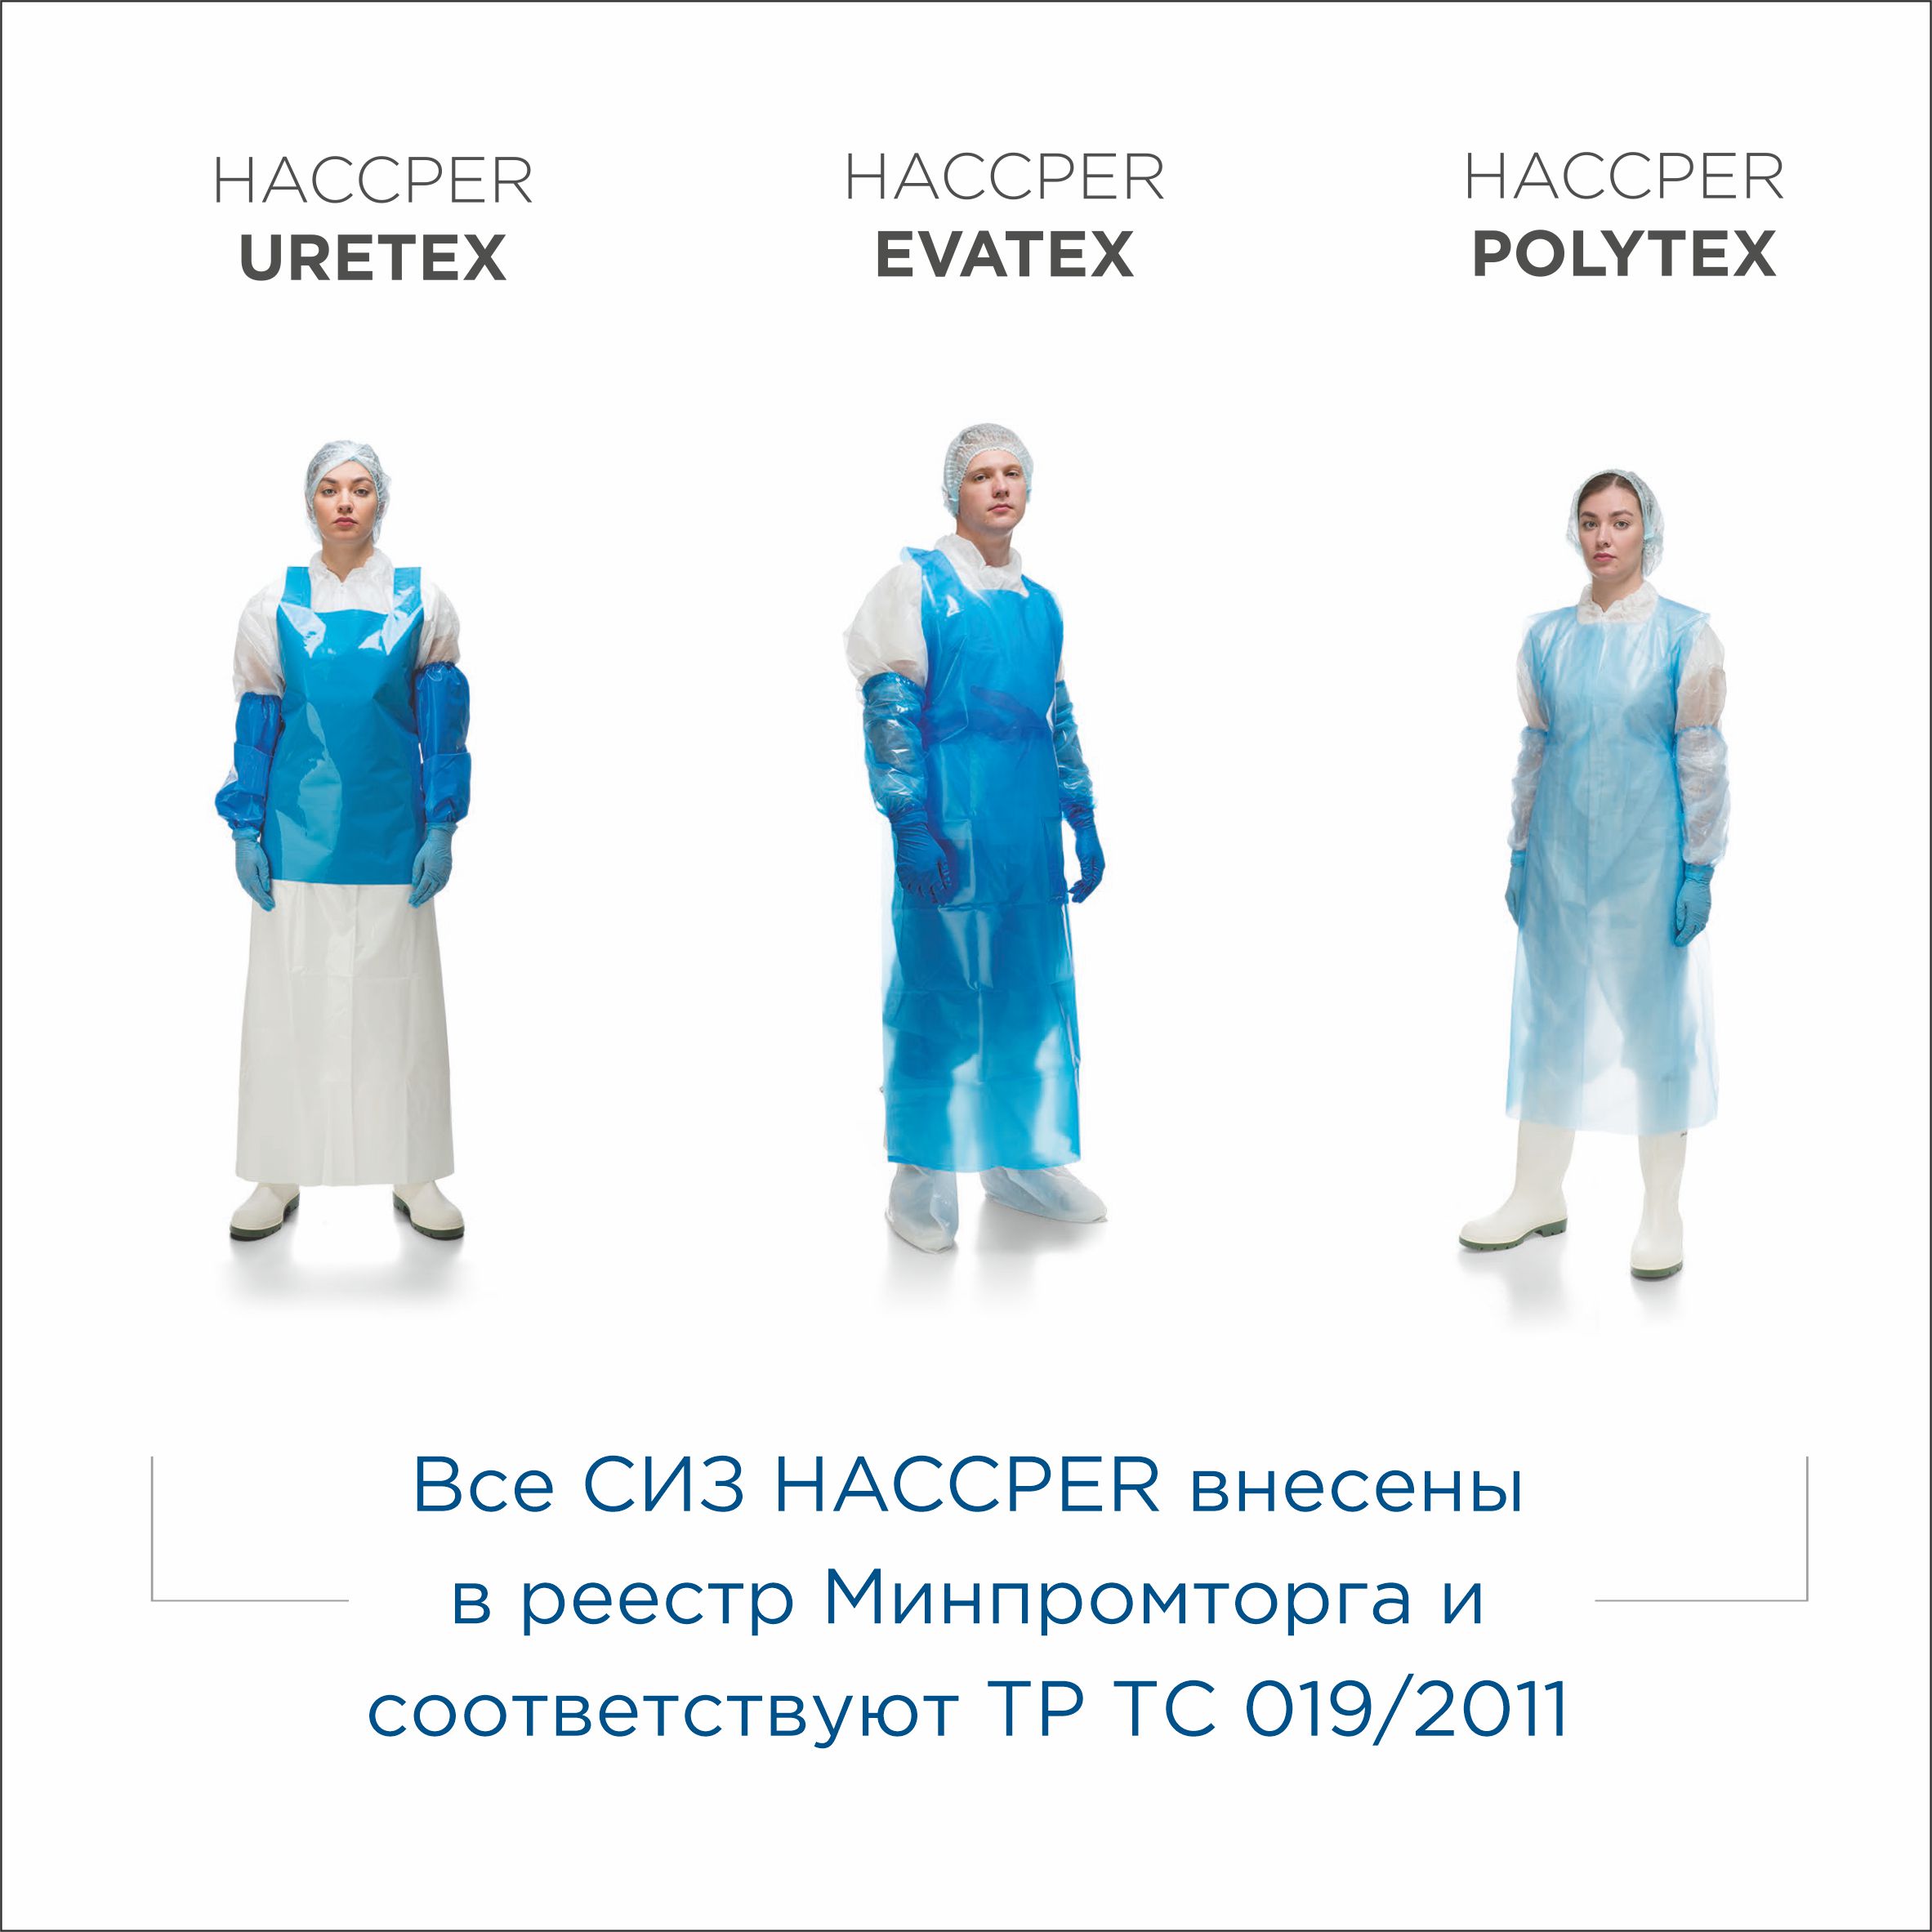 Фартук HACCPER Polytex 140 одноразовый в пластах, 1325*750 мм, 50 мкм, голубой